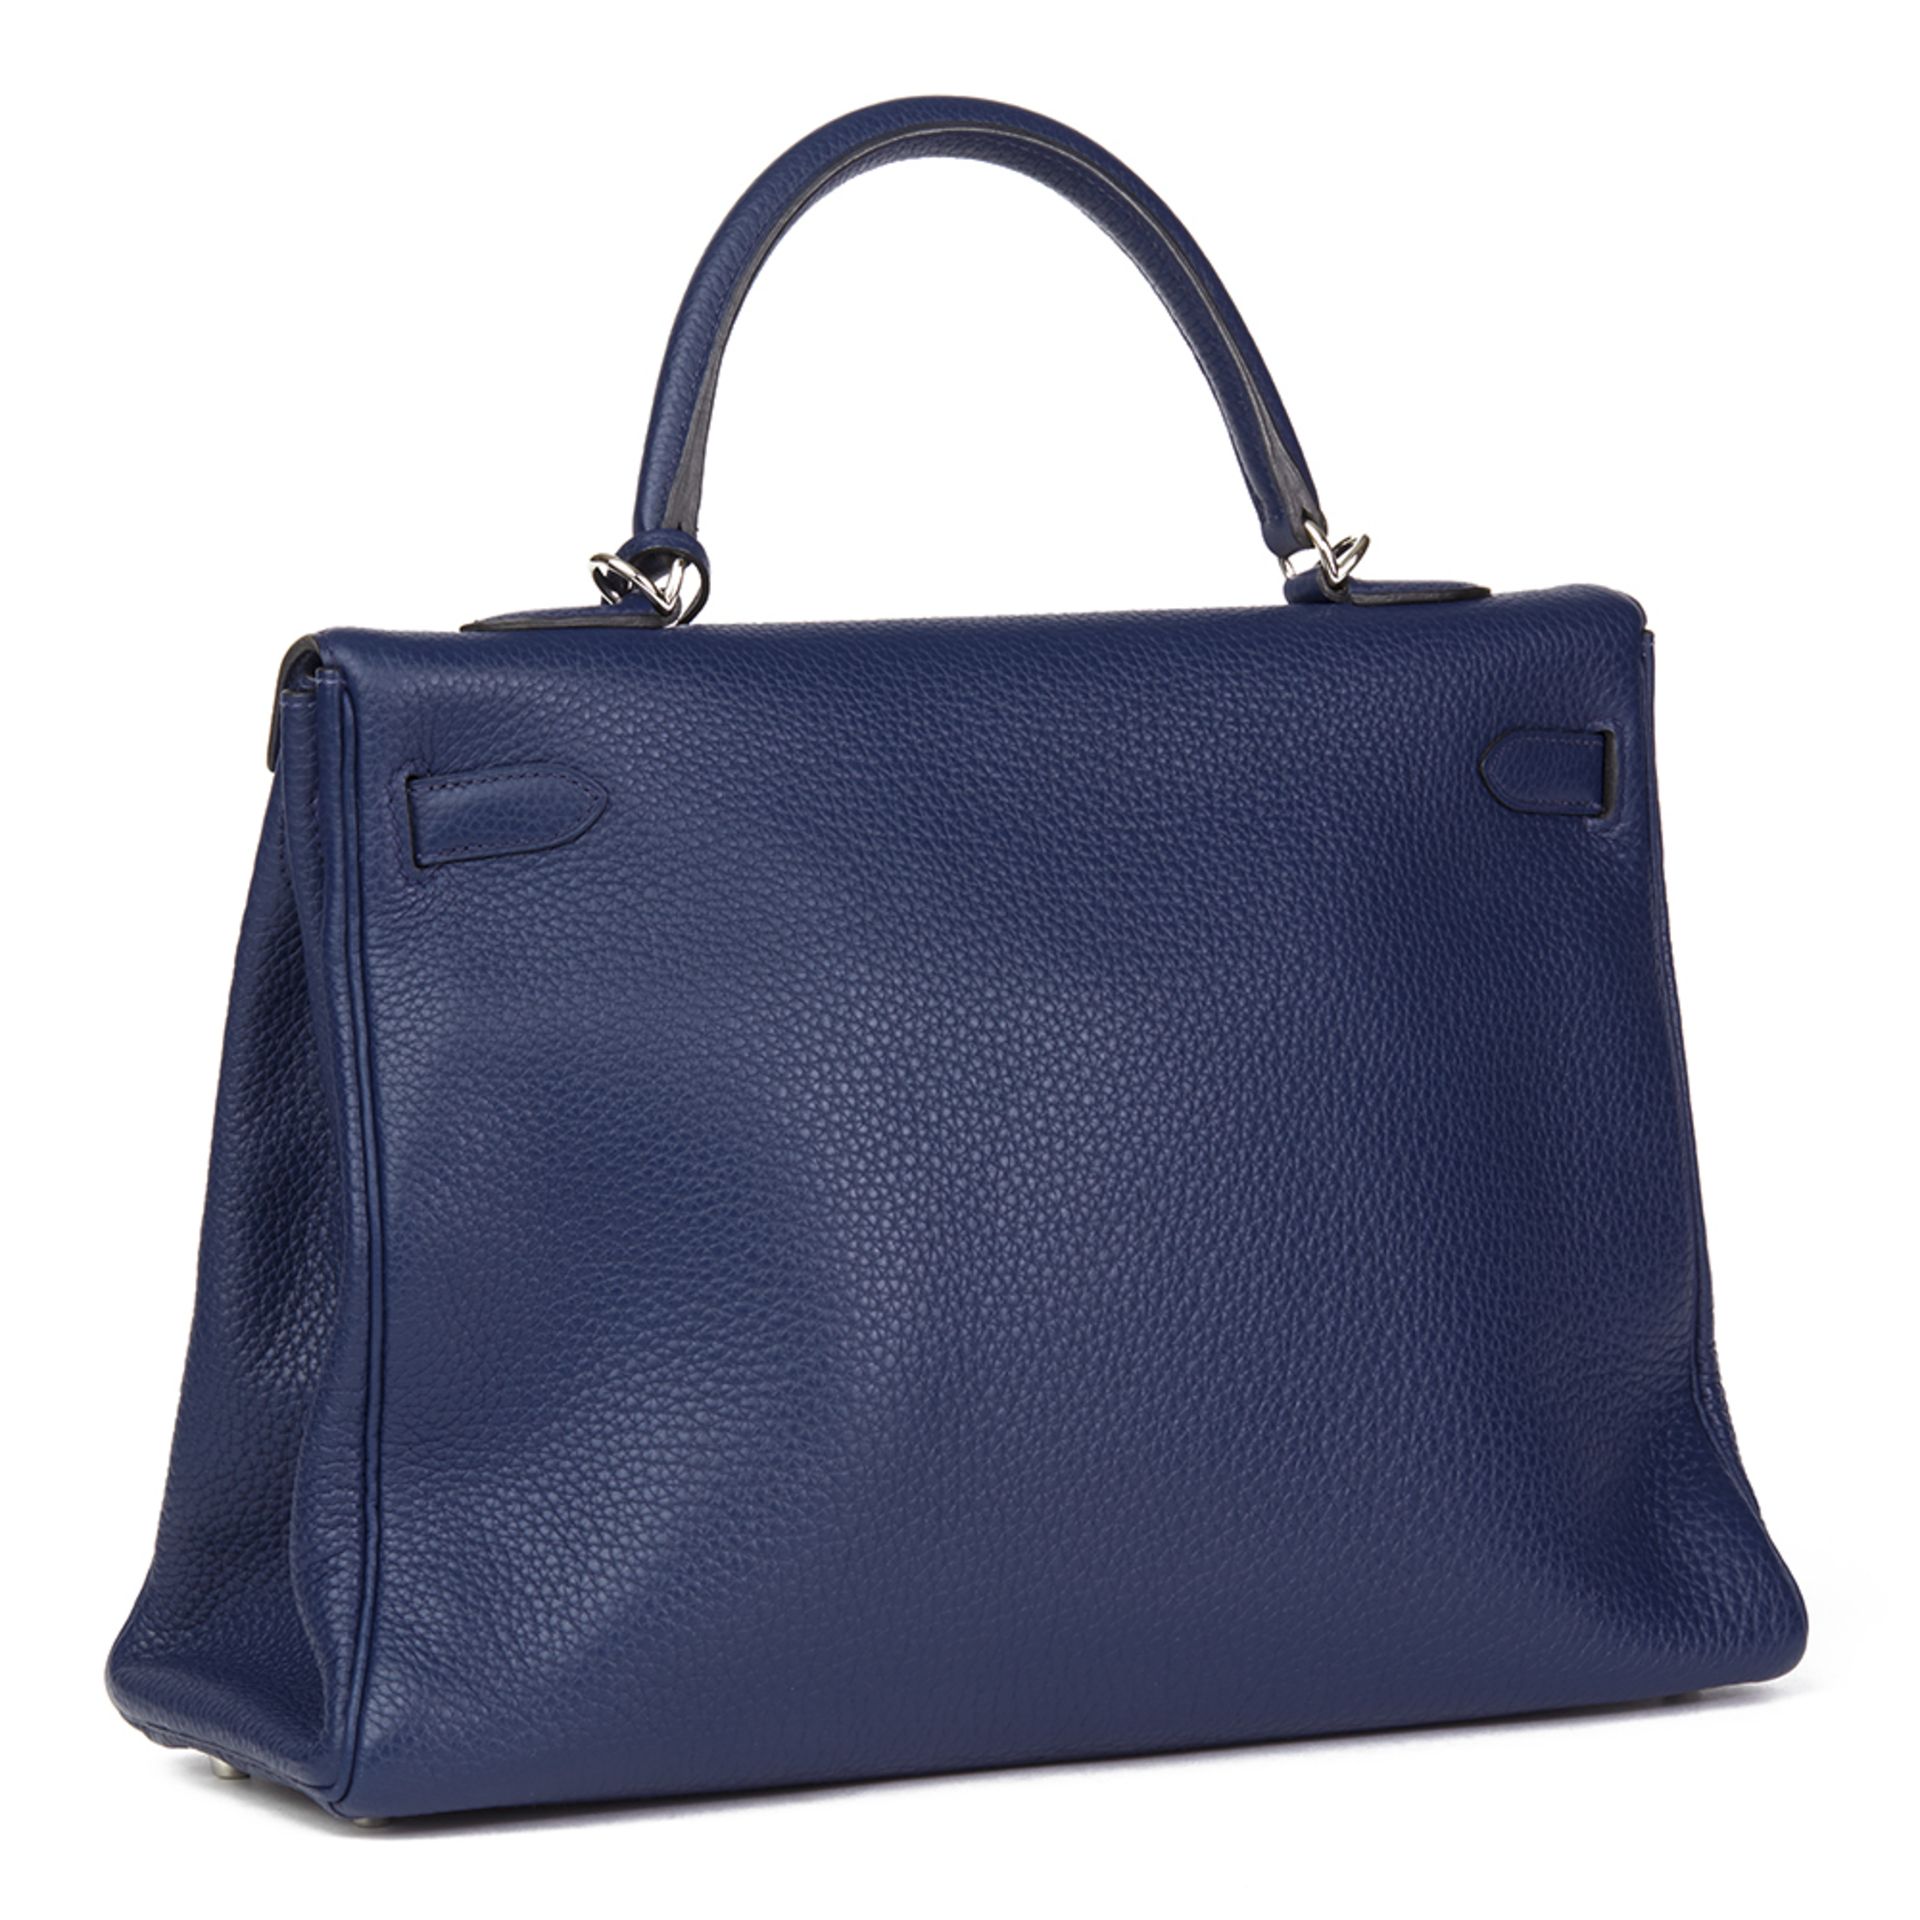 Hermès Bleu Saphir Togo Leather Kelly 35cm Retourne - Image 4 of 10